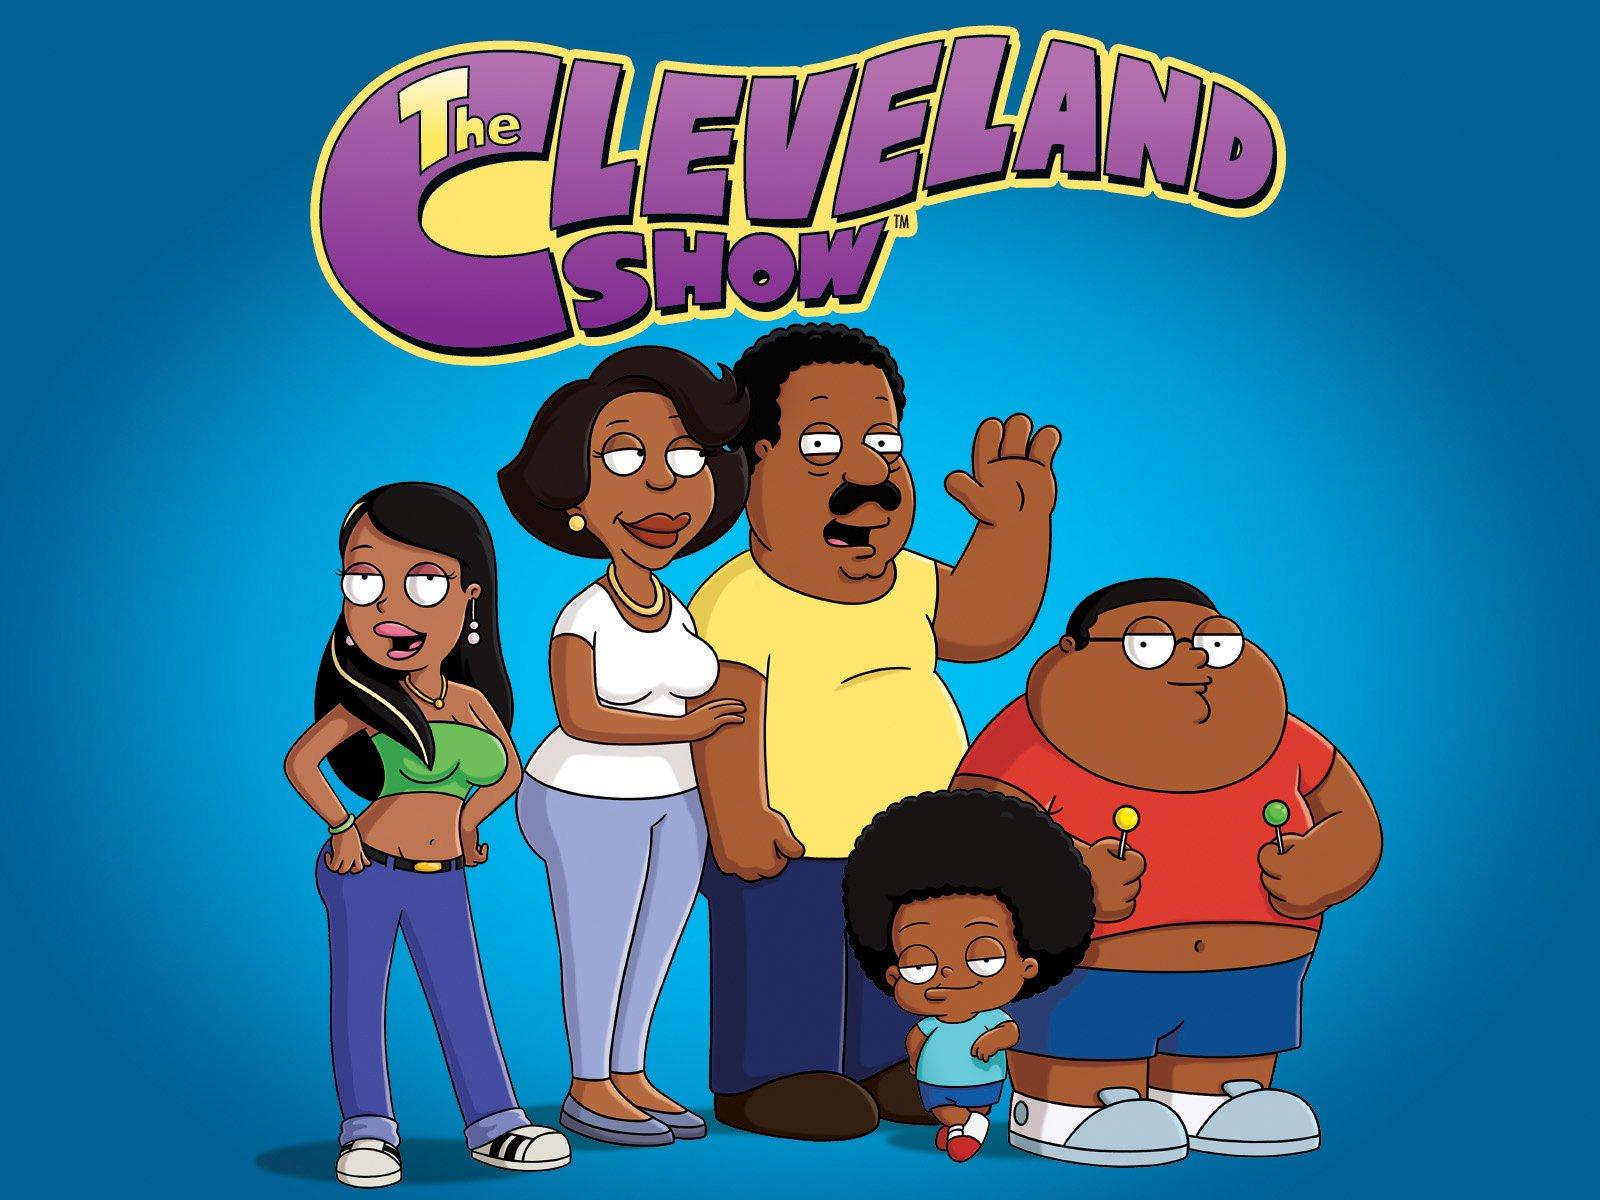 Amazon.co.uk: Watch The Cleveland Show